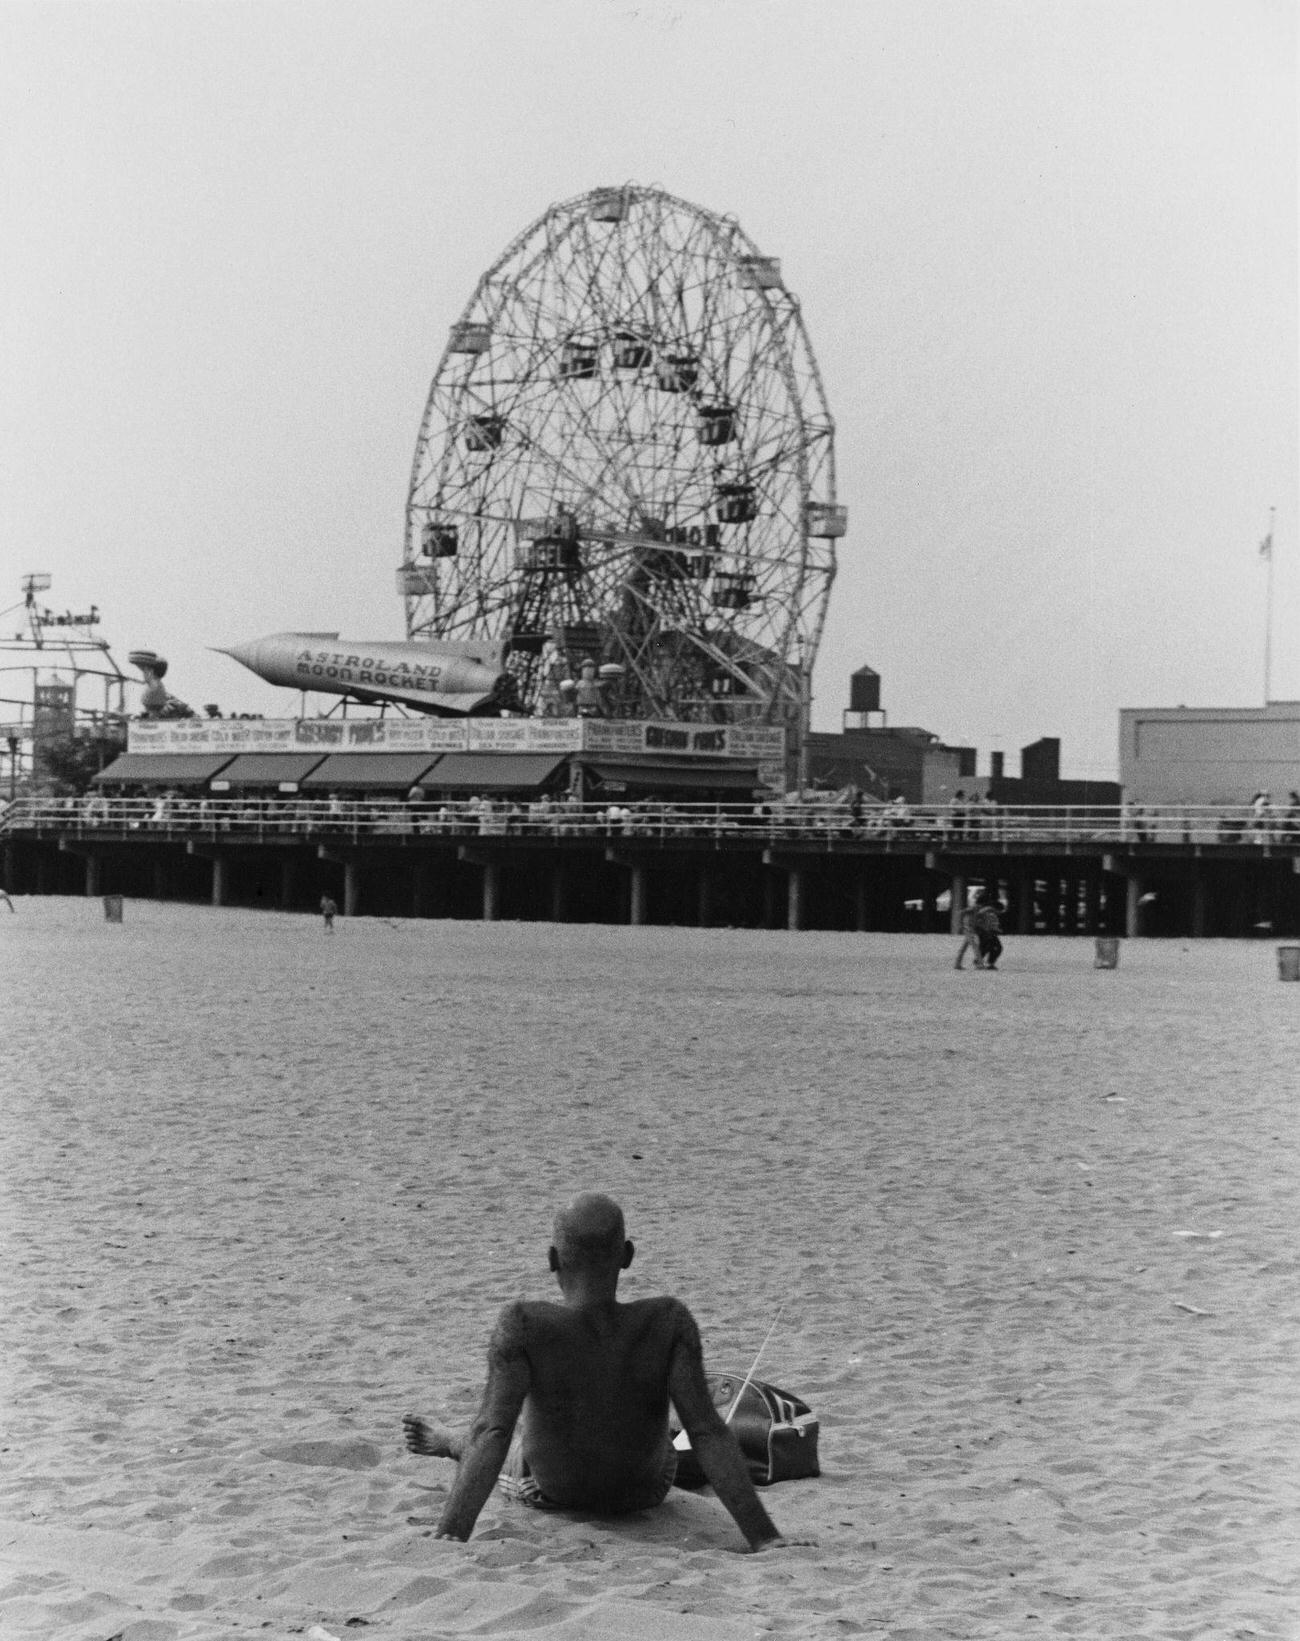 Astroland Amusement Park With Ferris Wheel, Coney Island, Circa 1975